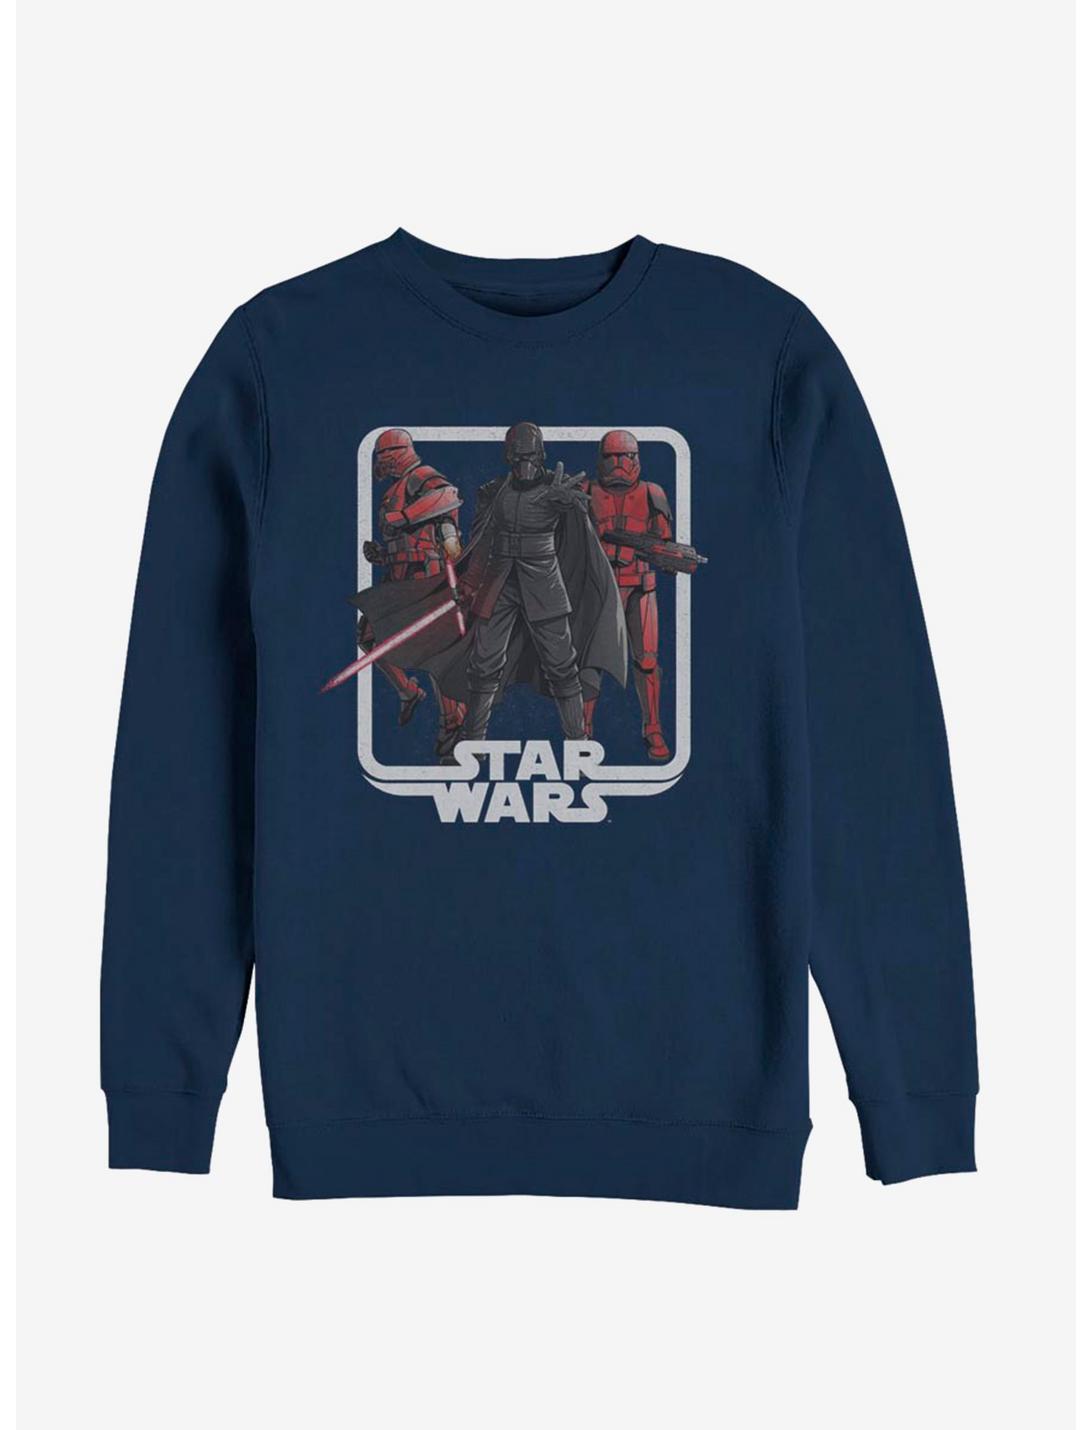 Star Wars Episode IX The Rise Of Skywalker Vindication Sweatshirt, NAVY, hi-res